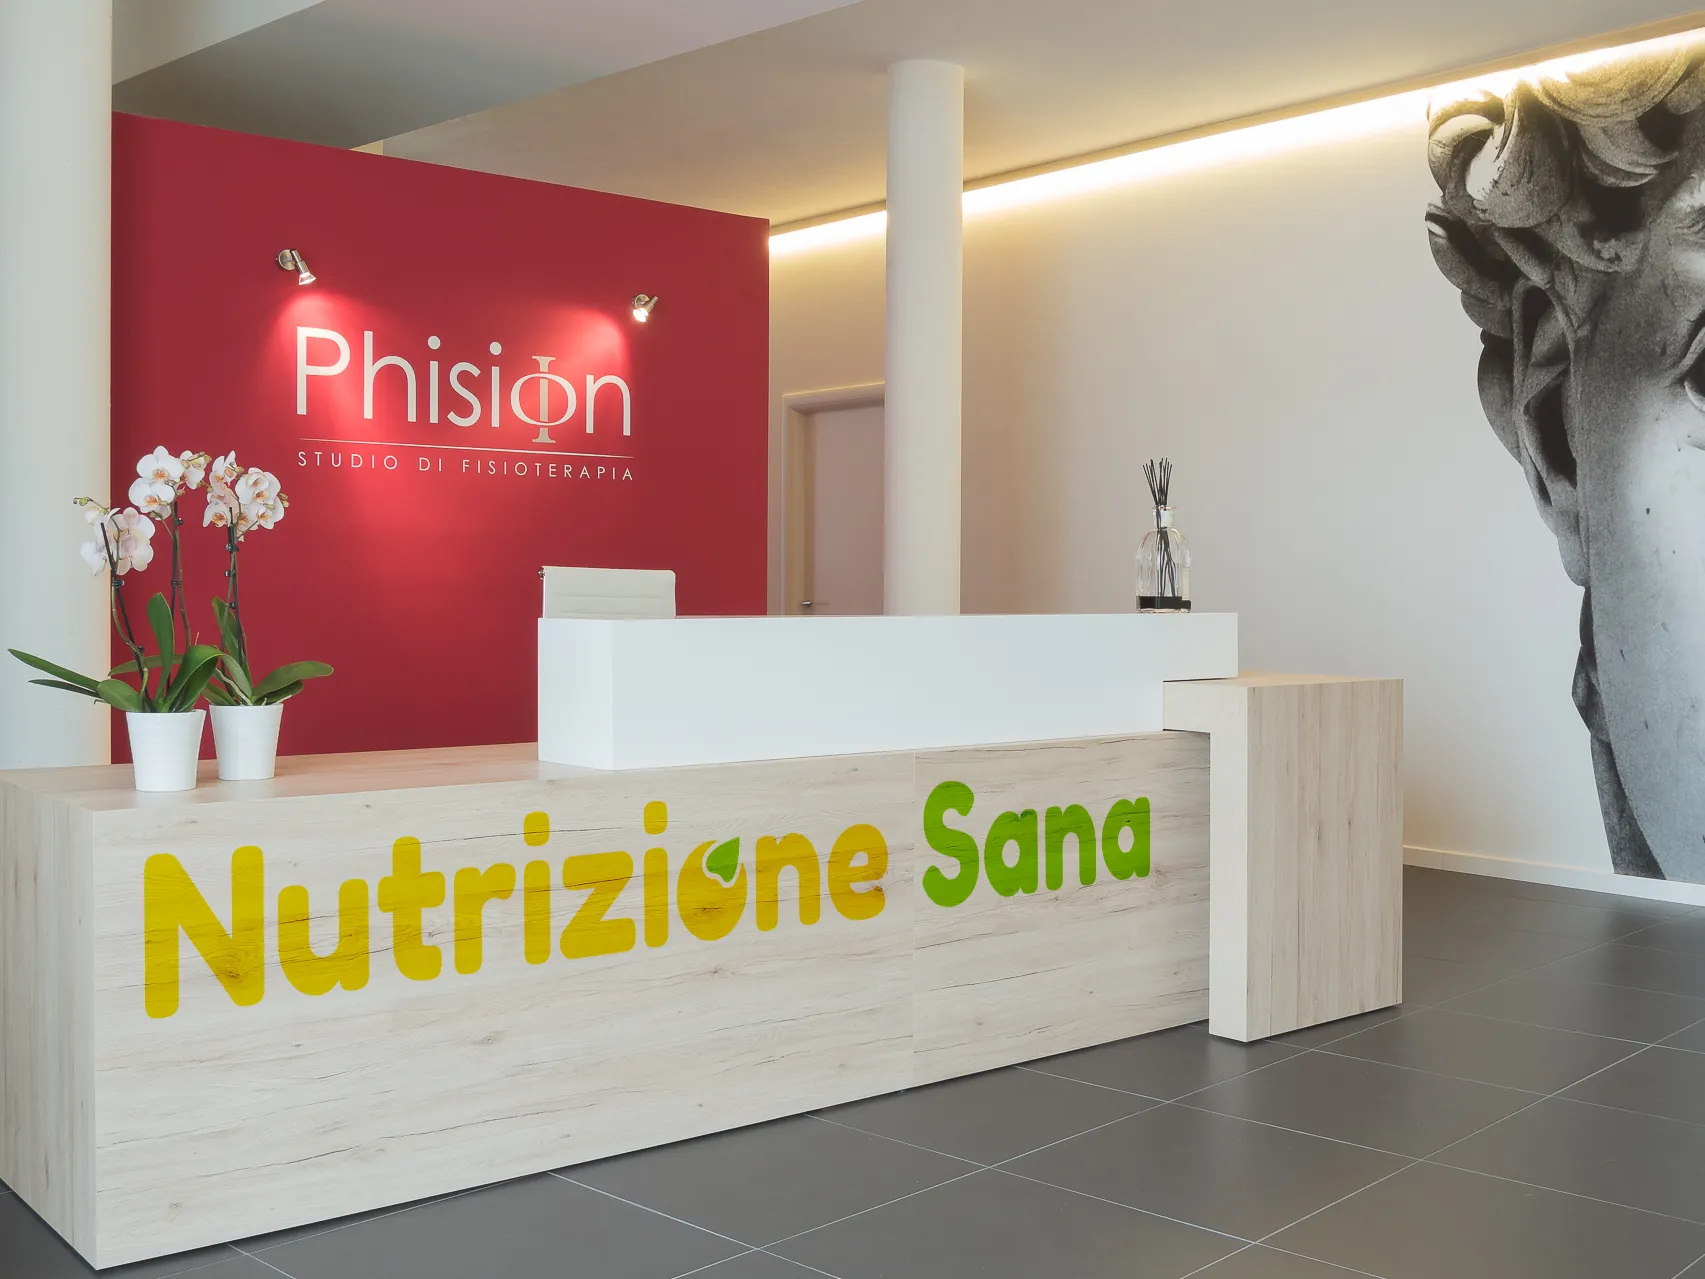 Phision Nutrizione Sana Sites